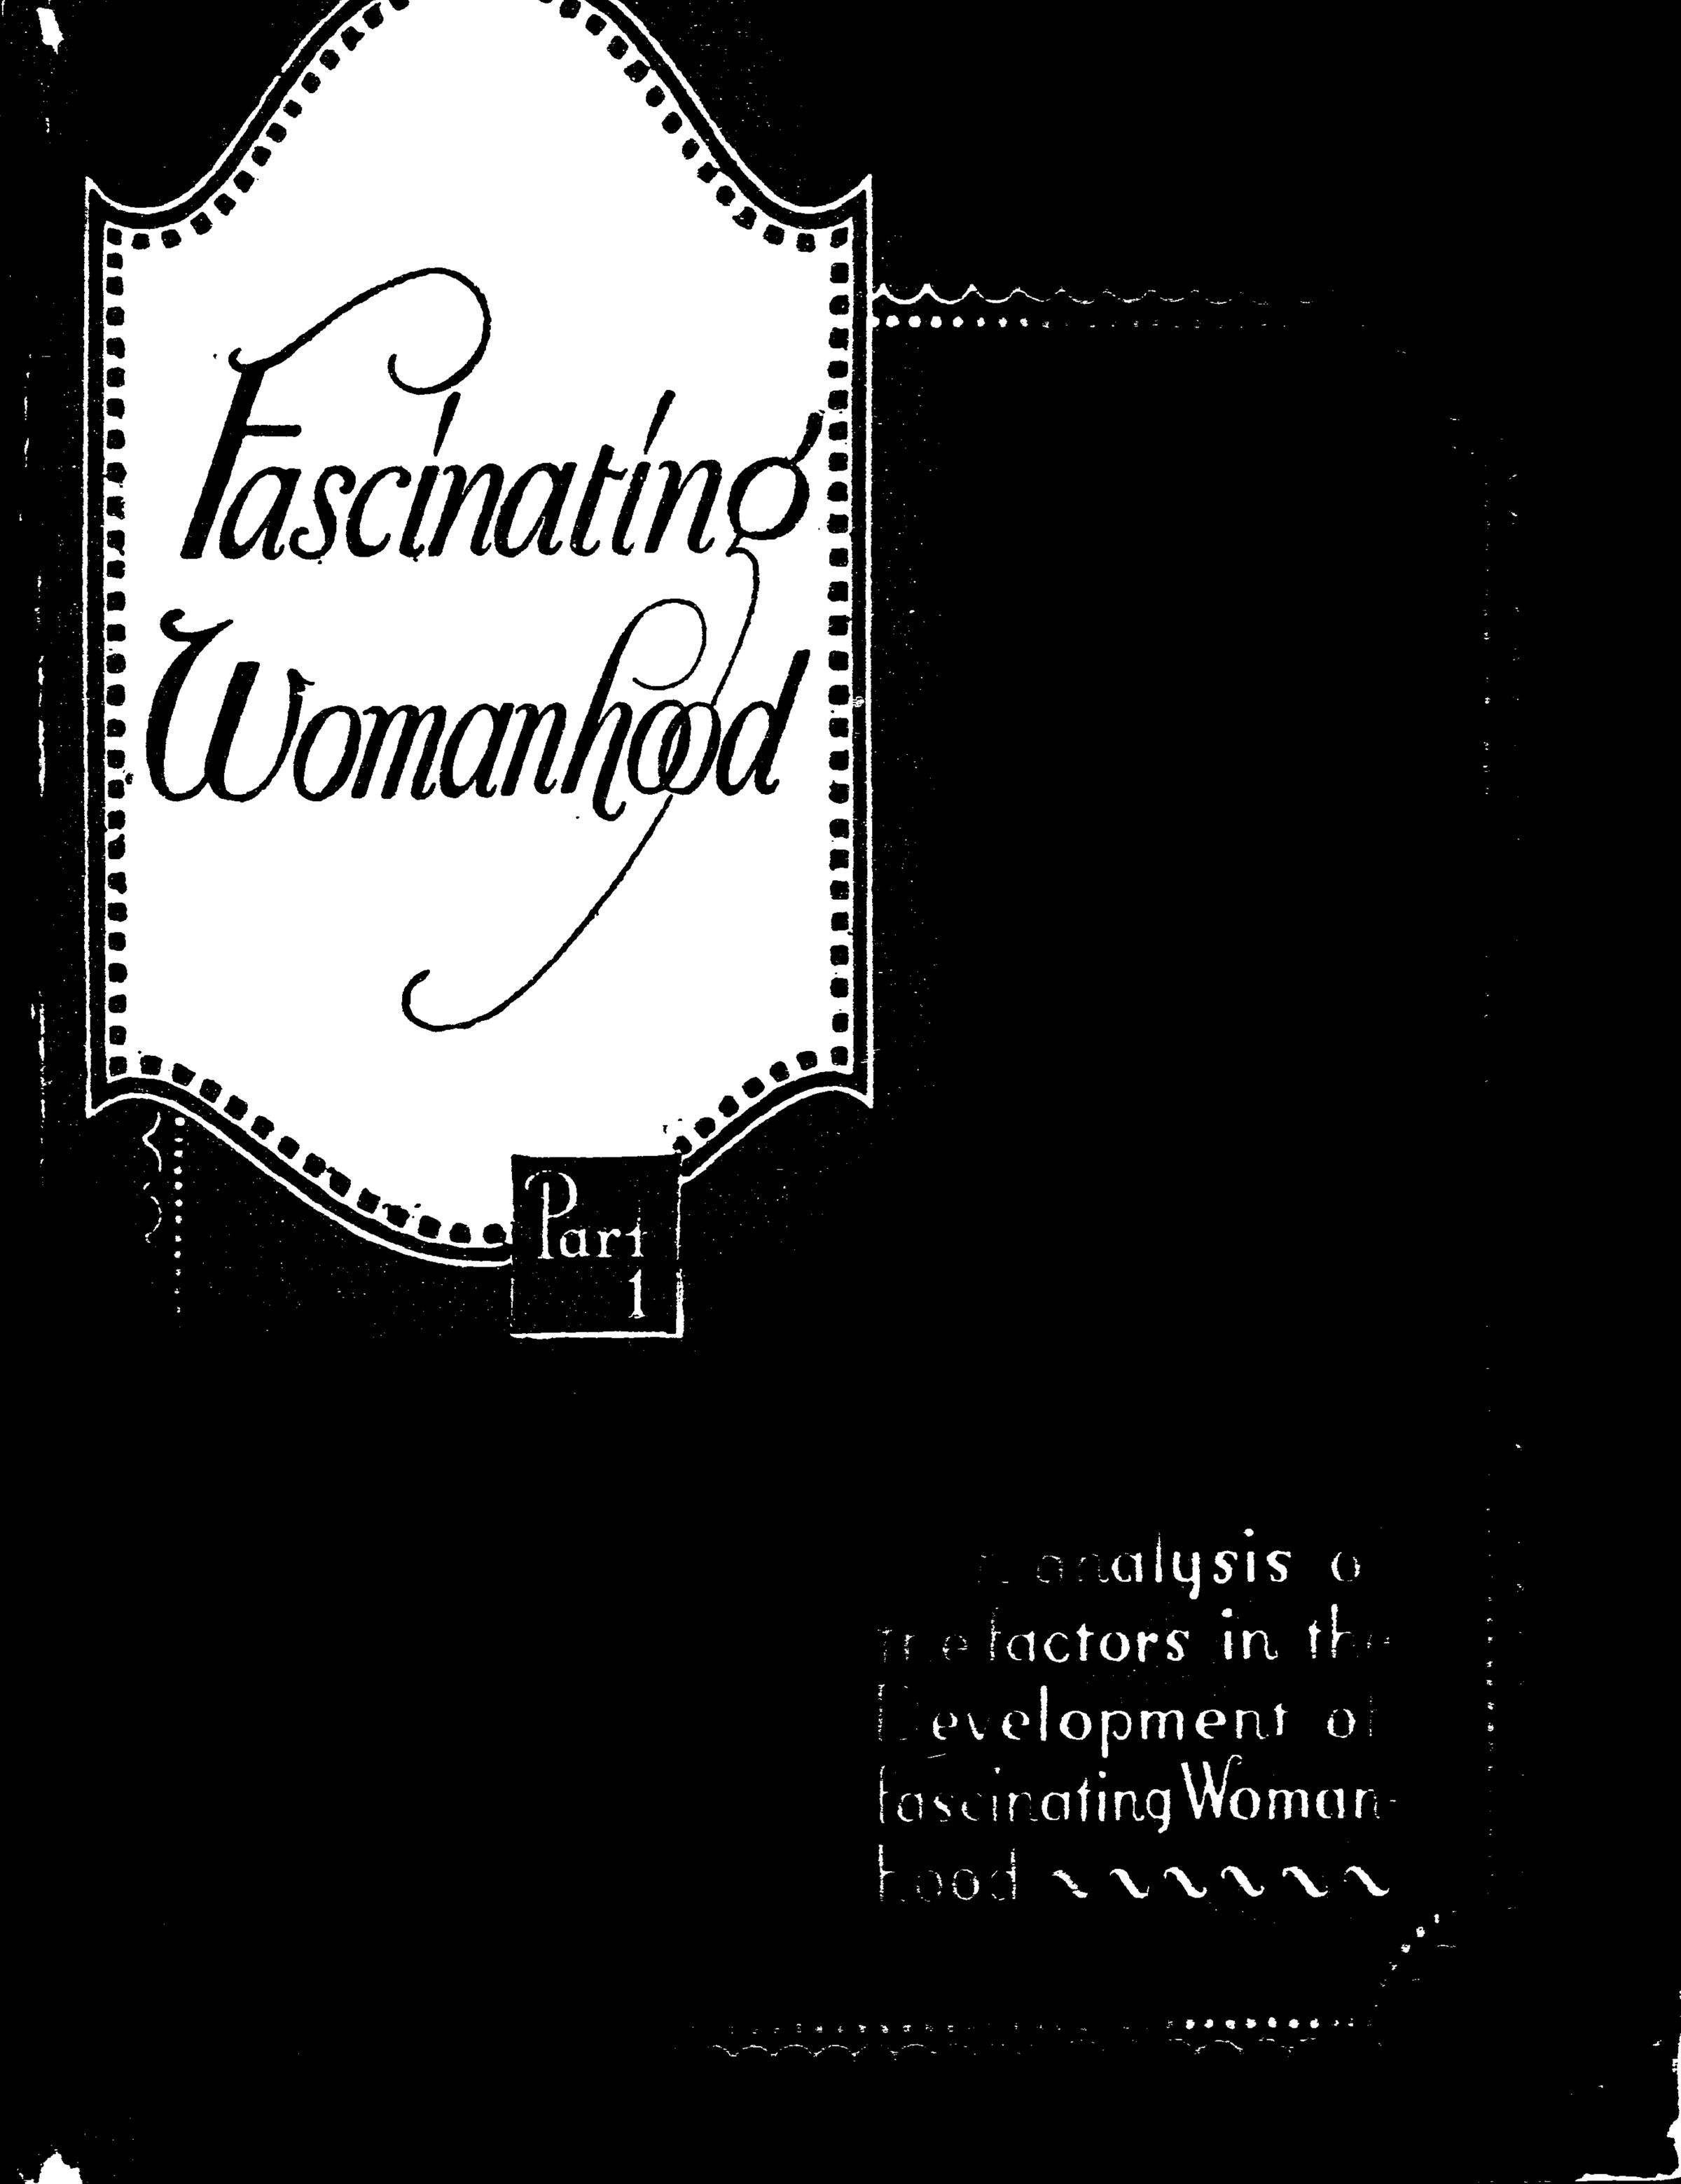 secrets of fascinating womanhood pamphlets 1920s